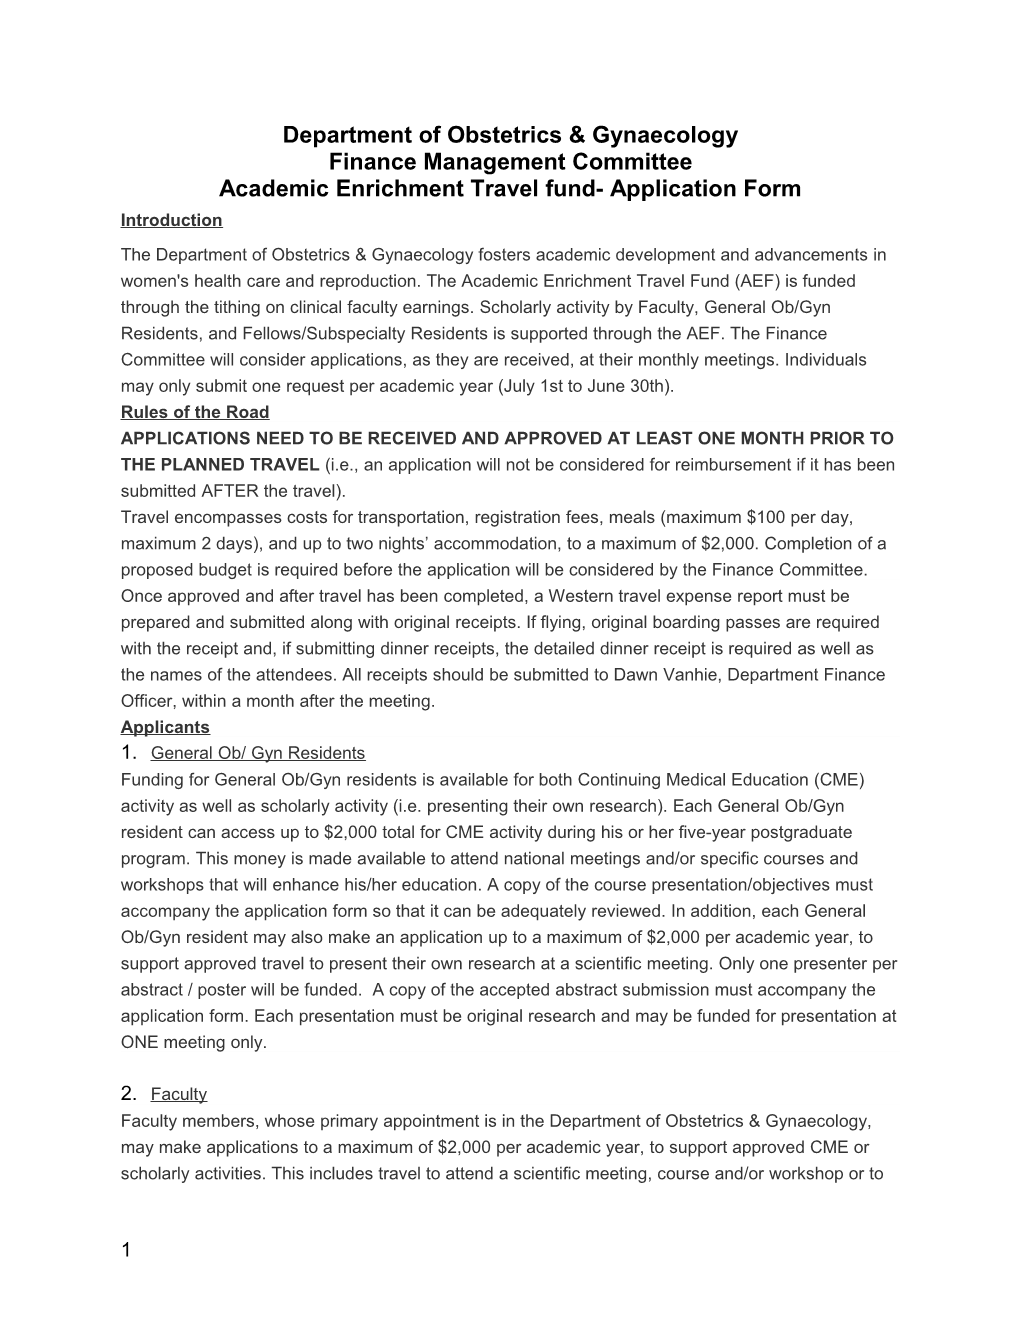 Academic Enrichment Travel Fund- Application Form